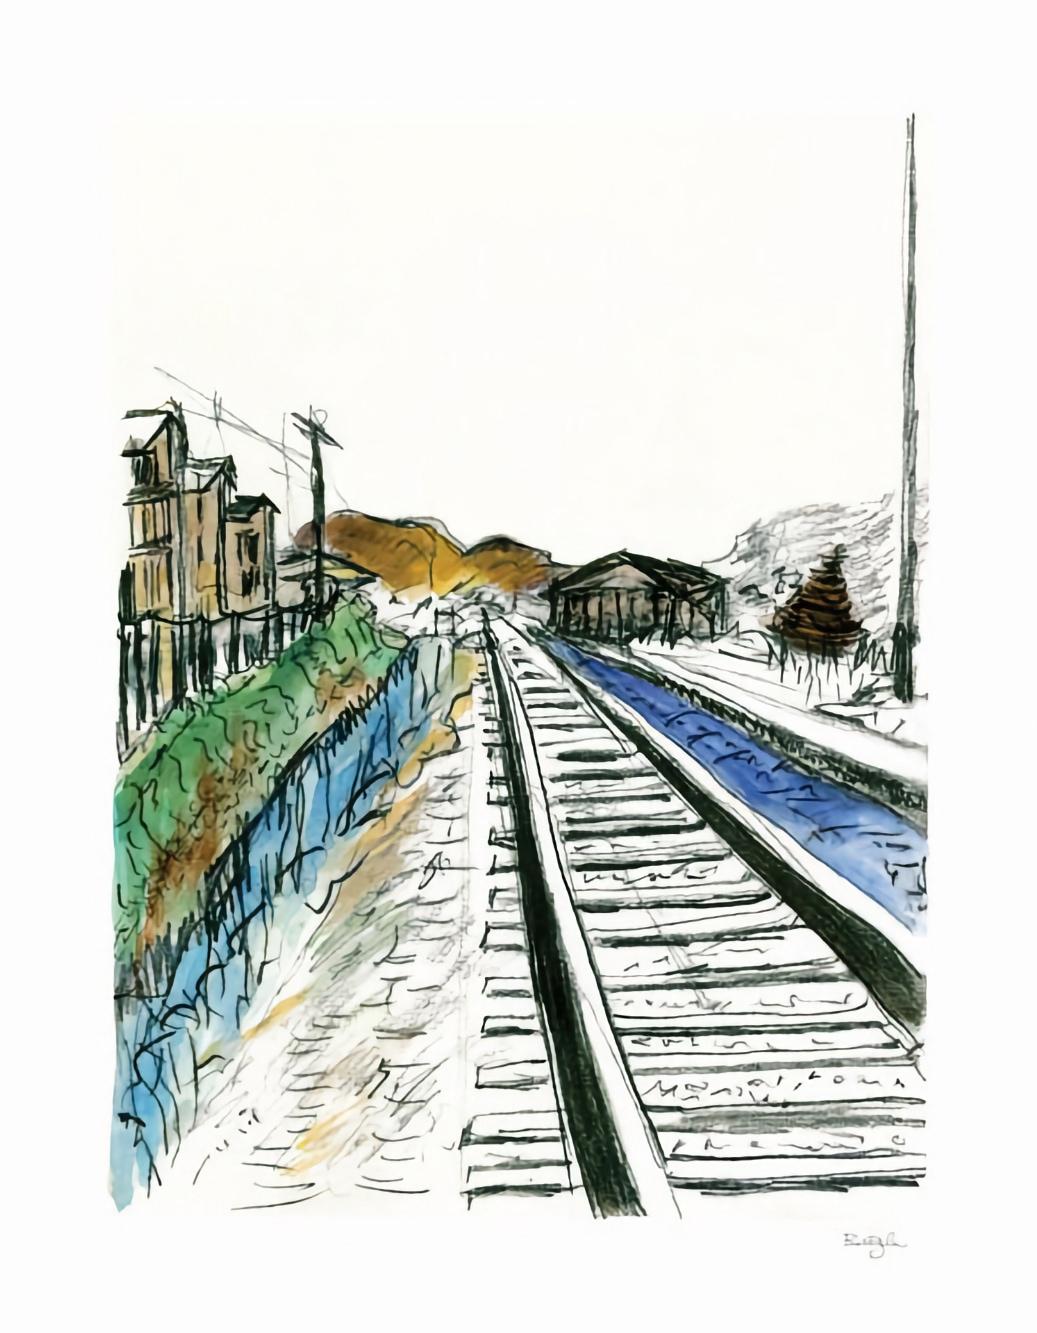 Bob Dylan - Train Tracks (white), 2012